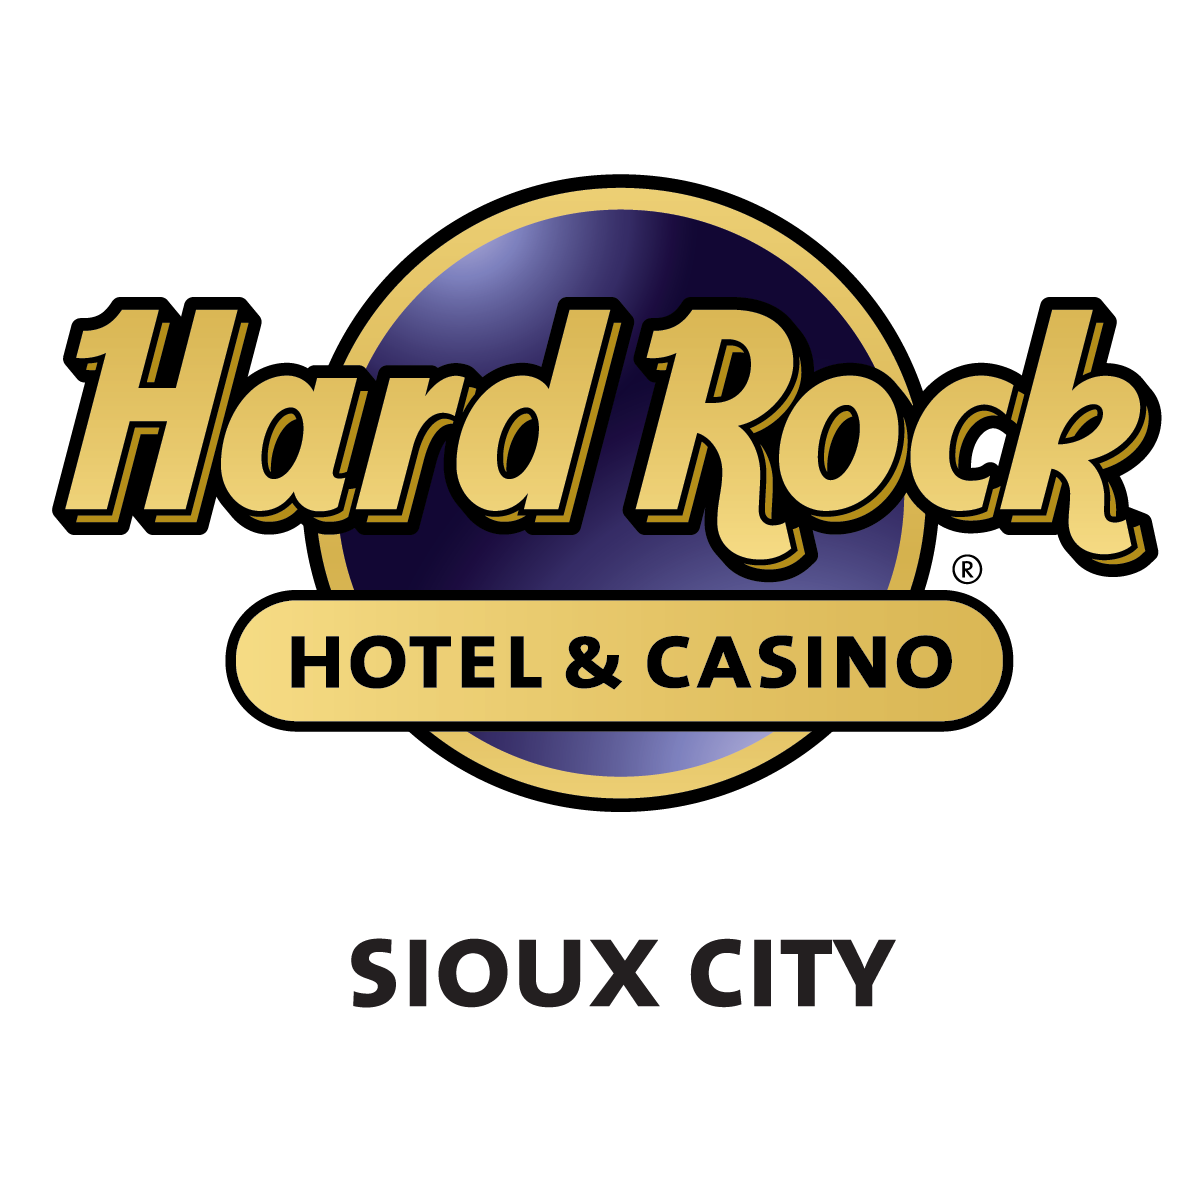 Hard Rock Hotel and Casino: Gold